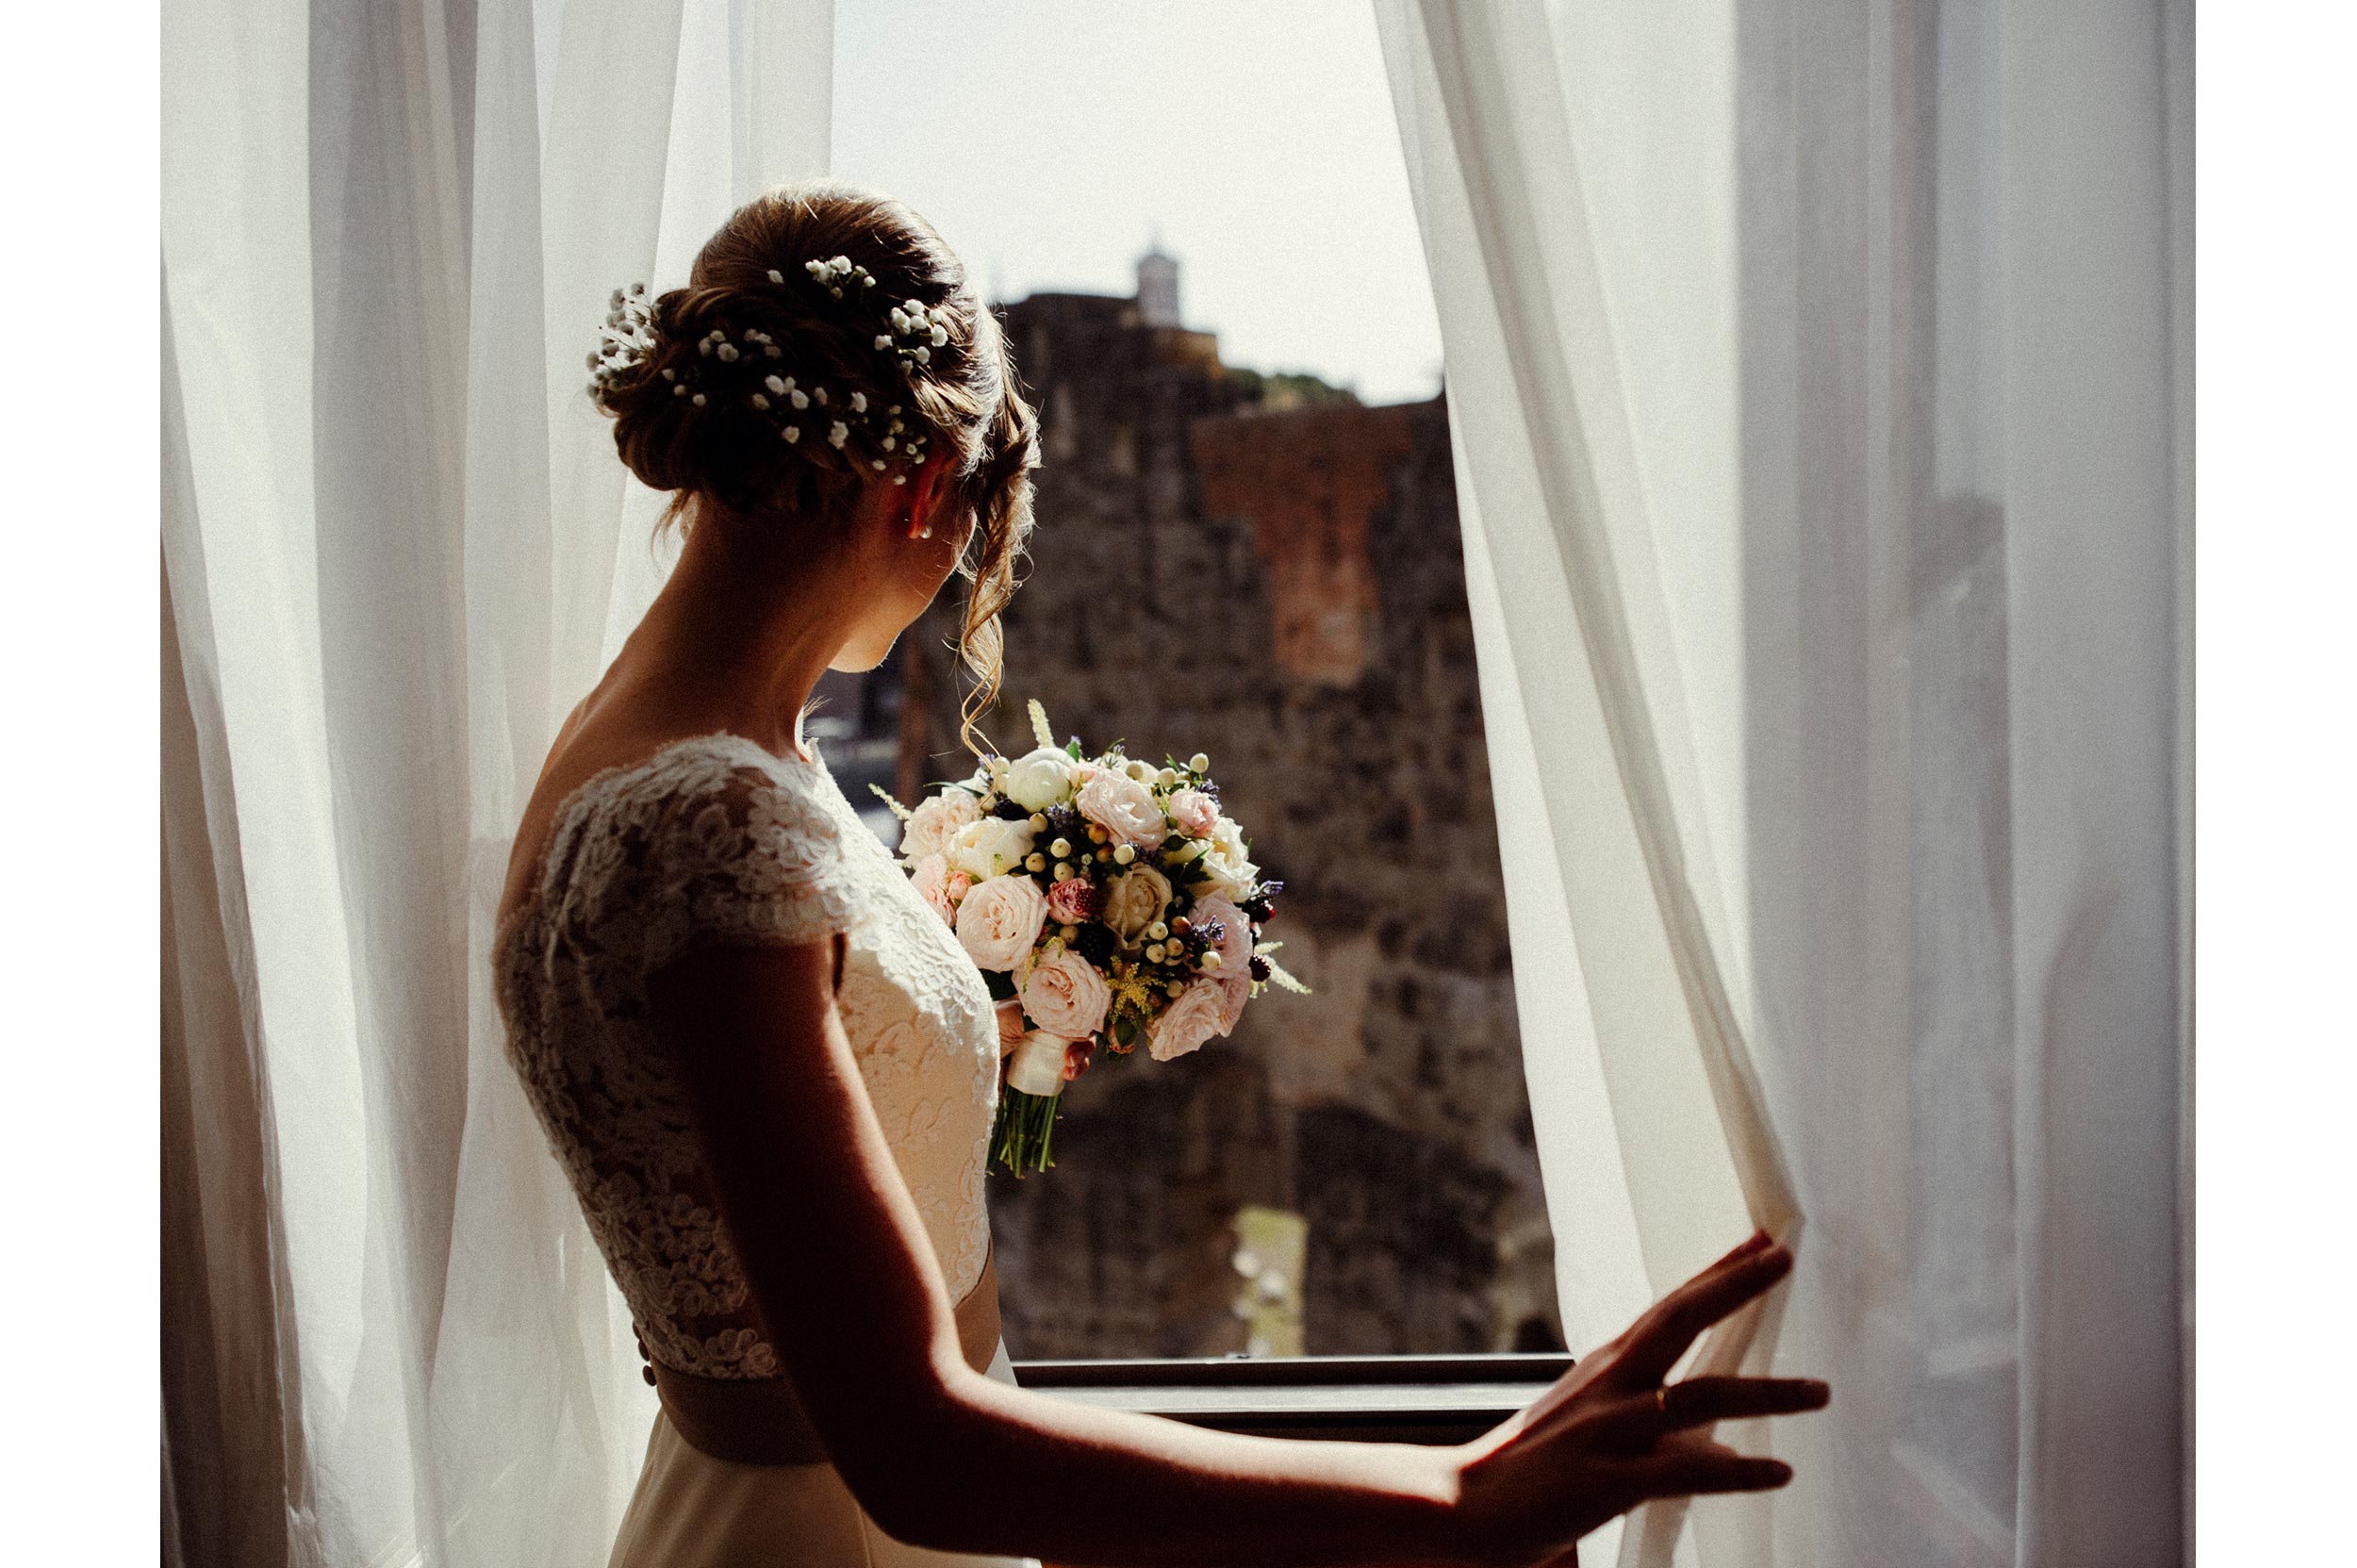 Roman Forum Rome Wedding Photographer Alessandro Avenali Bride at the Window with Bouquet.jpg